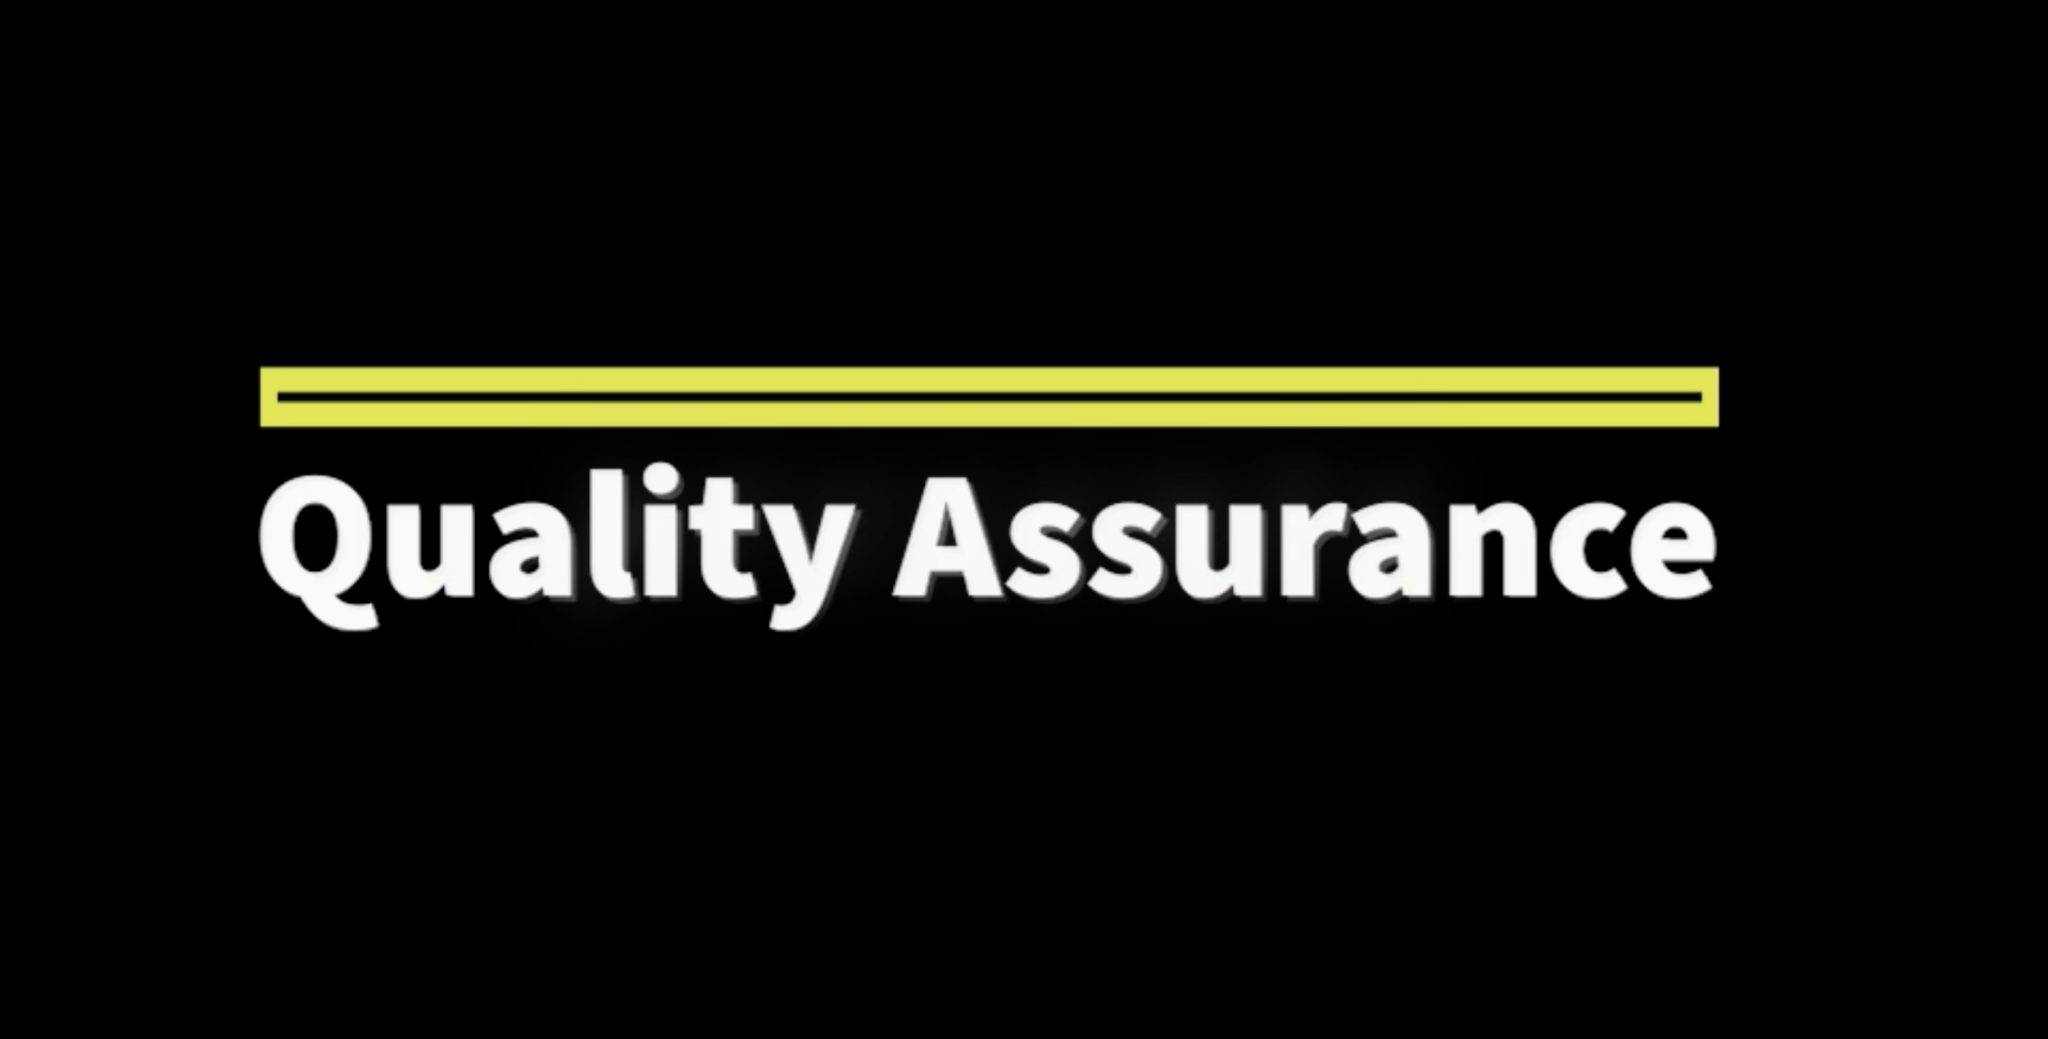 Quality Assurance: Three Ways We Ensure Quality